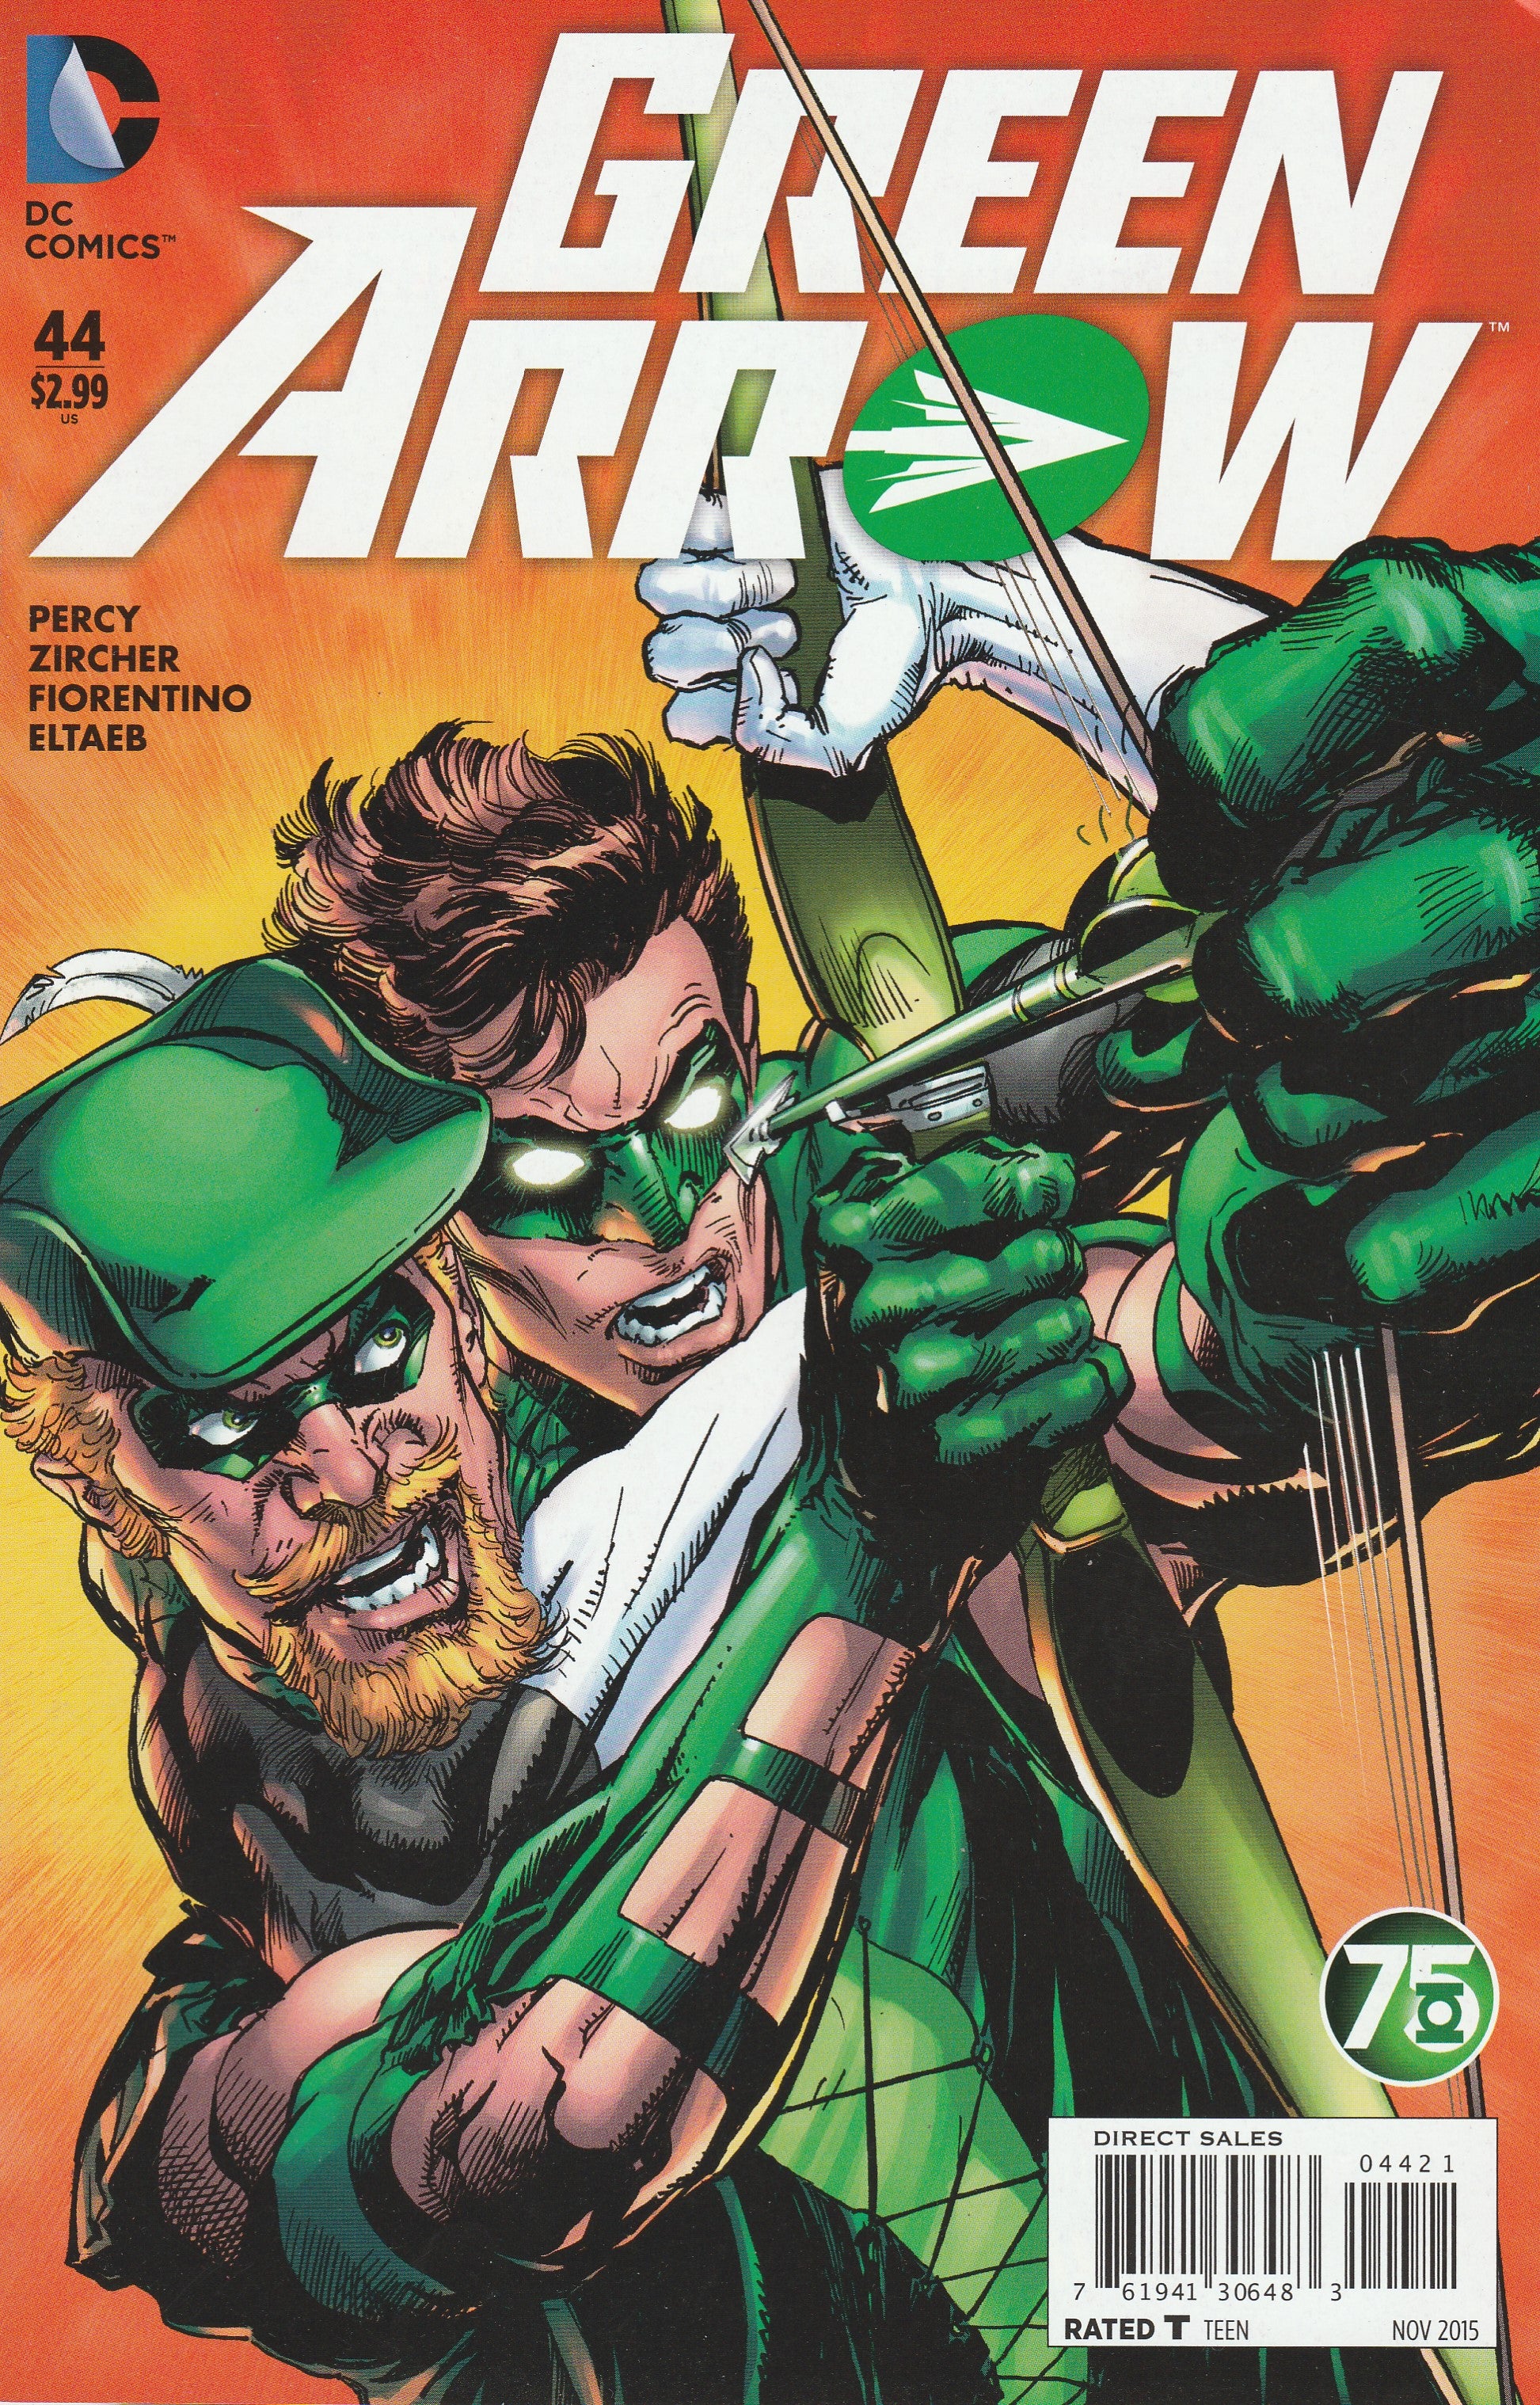 Green Arrow Vol. 7: Kingdom